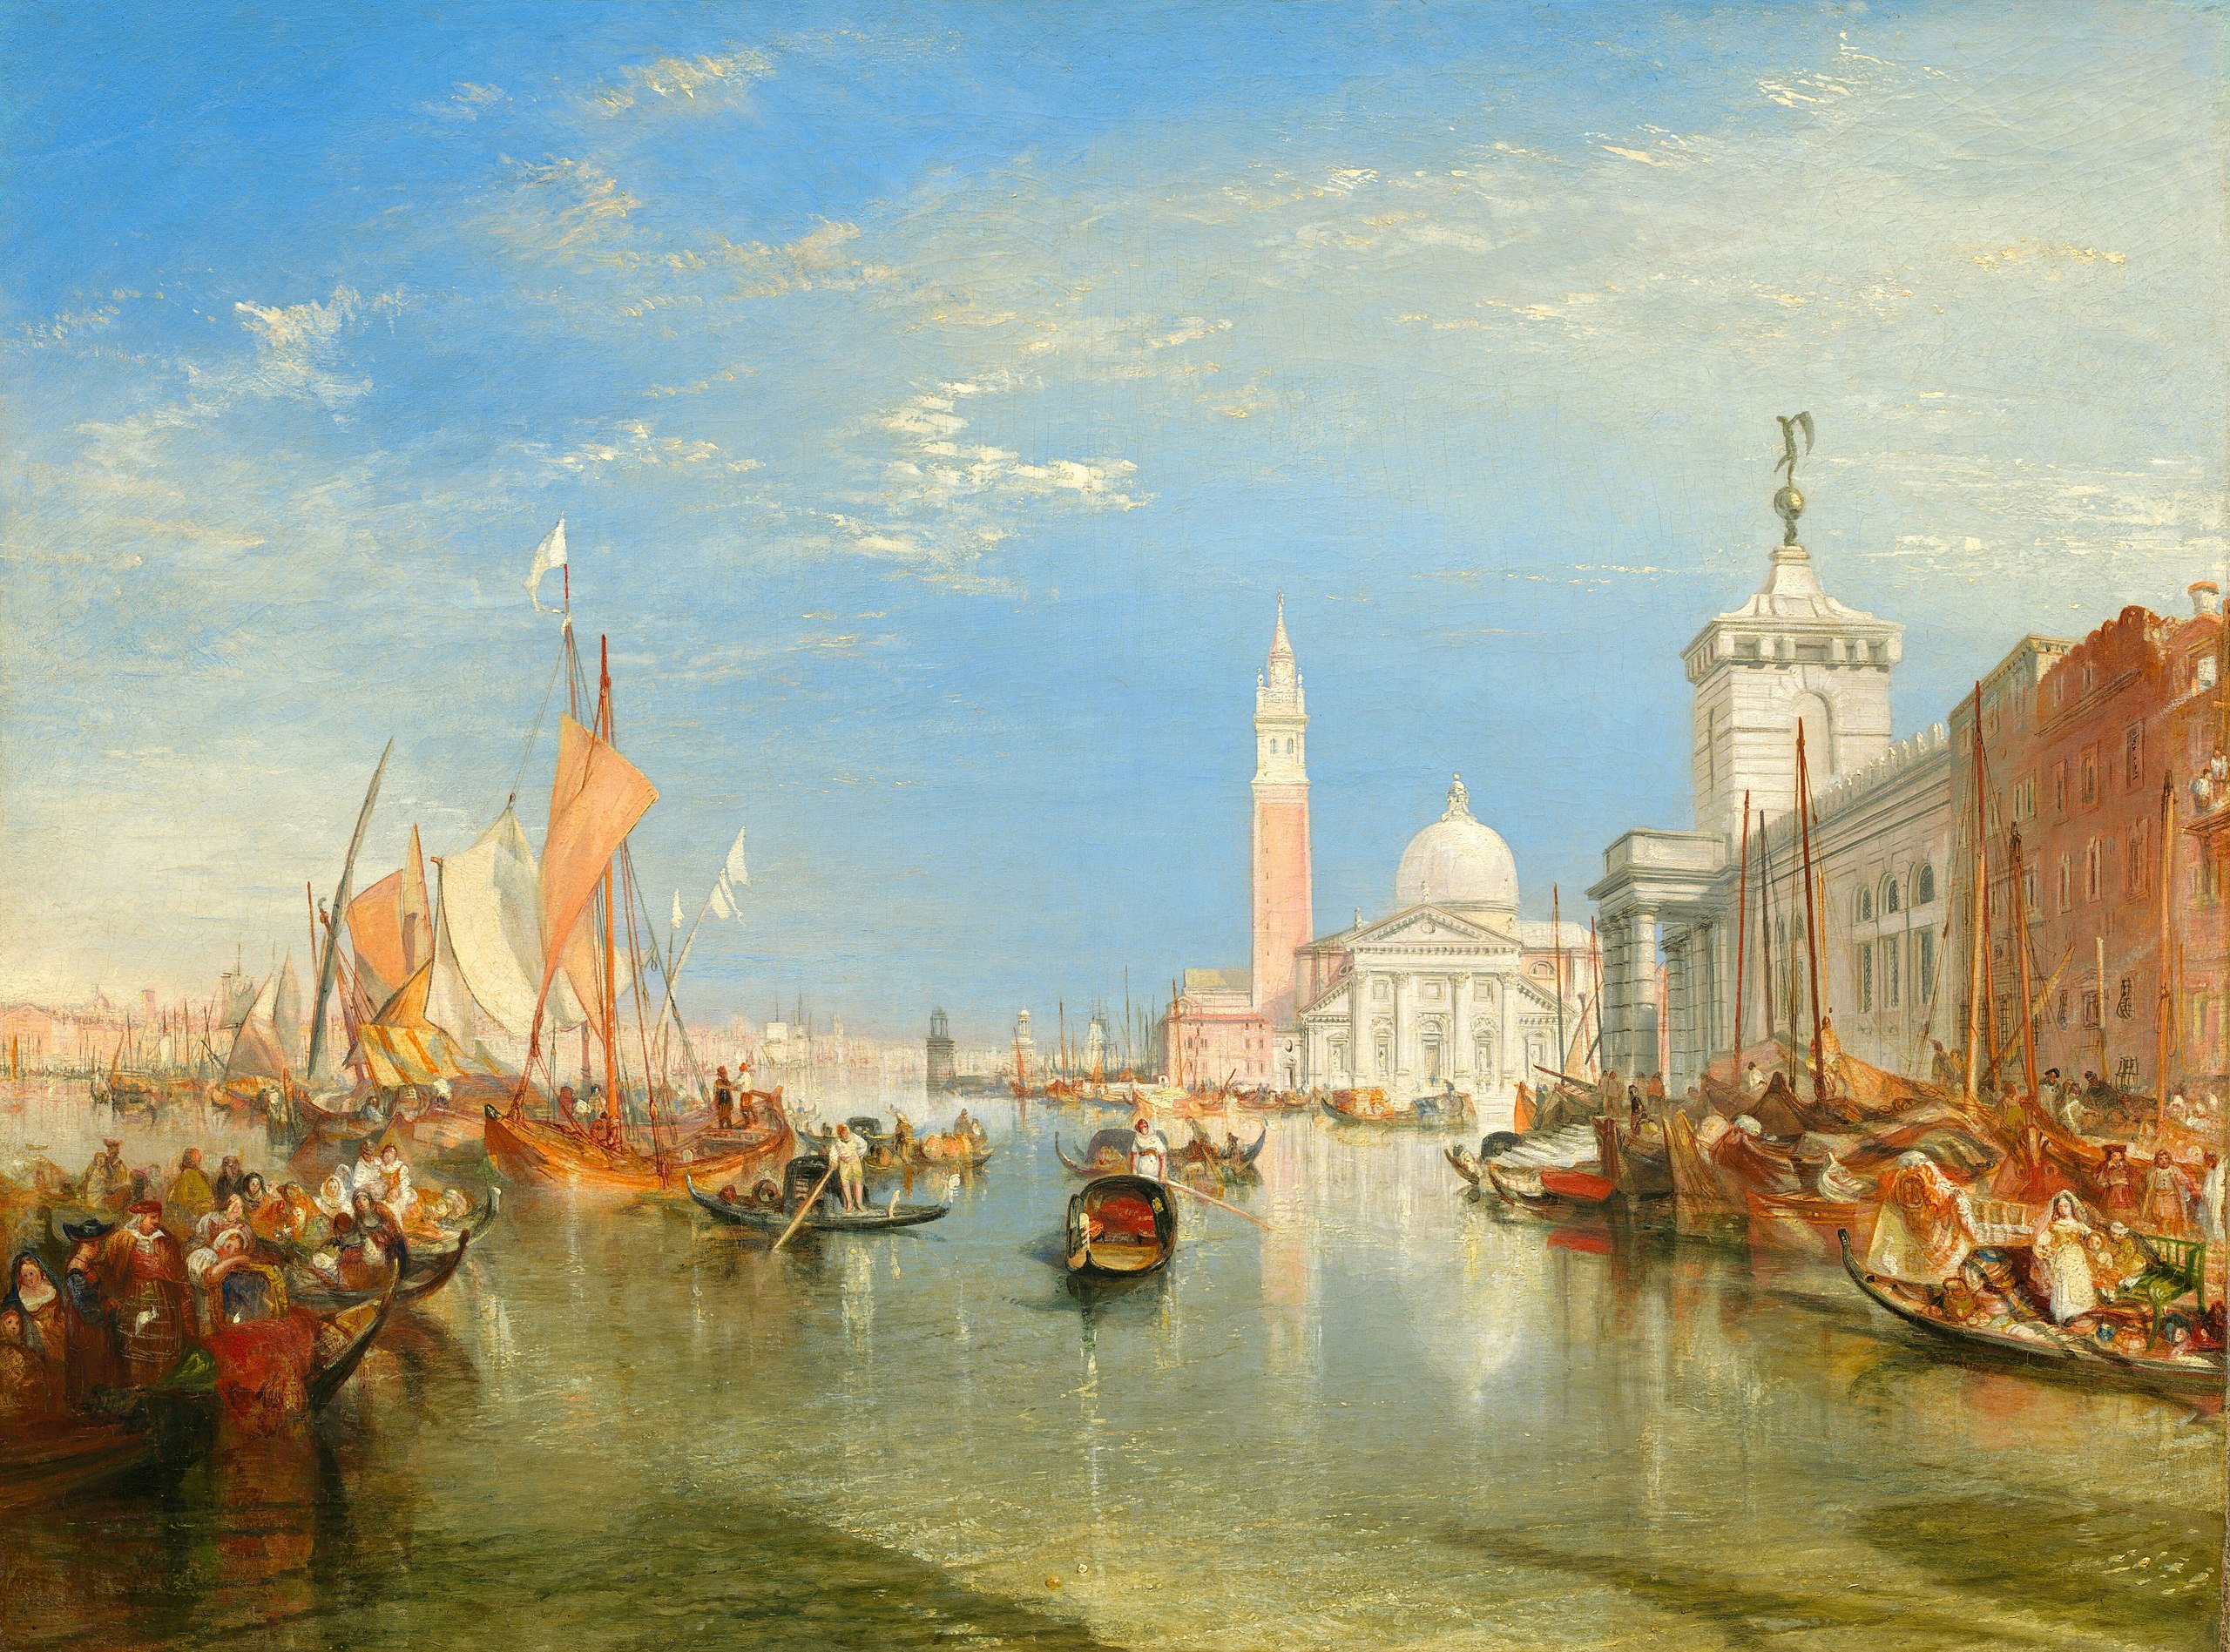 Венеция: Догана и Сан-Джорджо Маджоре by Joseph Mallord William Turner - 1834 - 91,5 x 122 см 